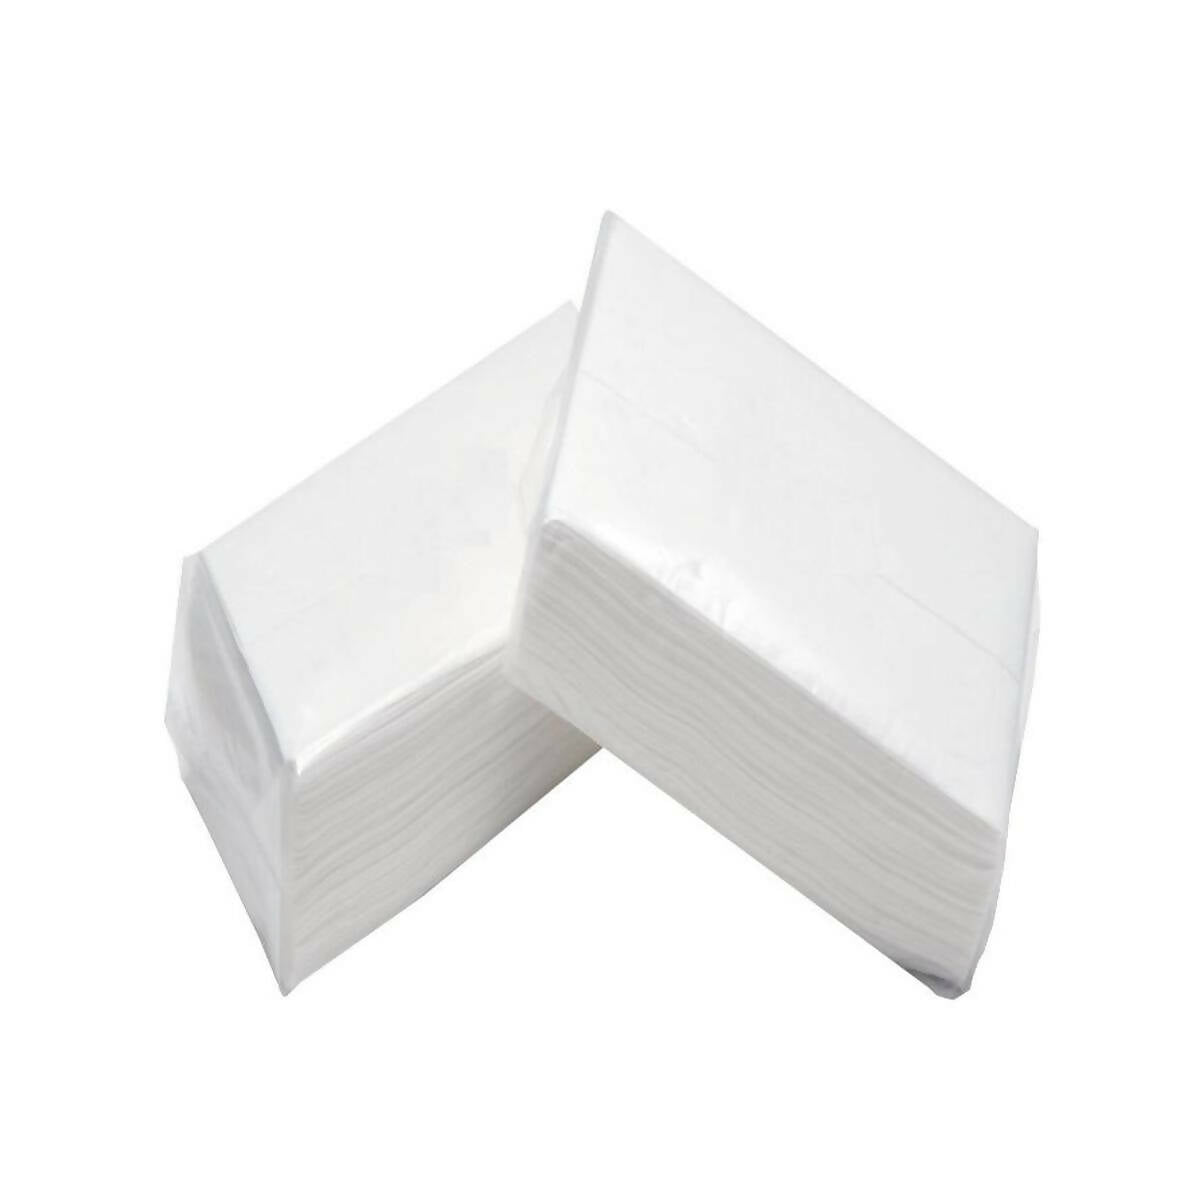 Soft Pack Facial Tissues - 150 Sheets